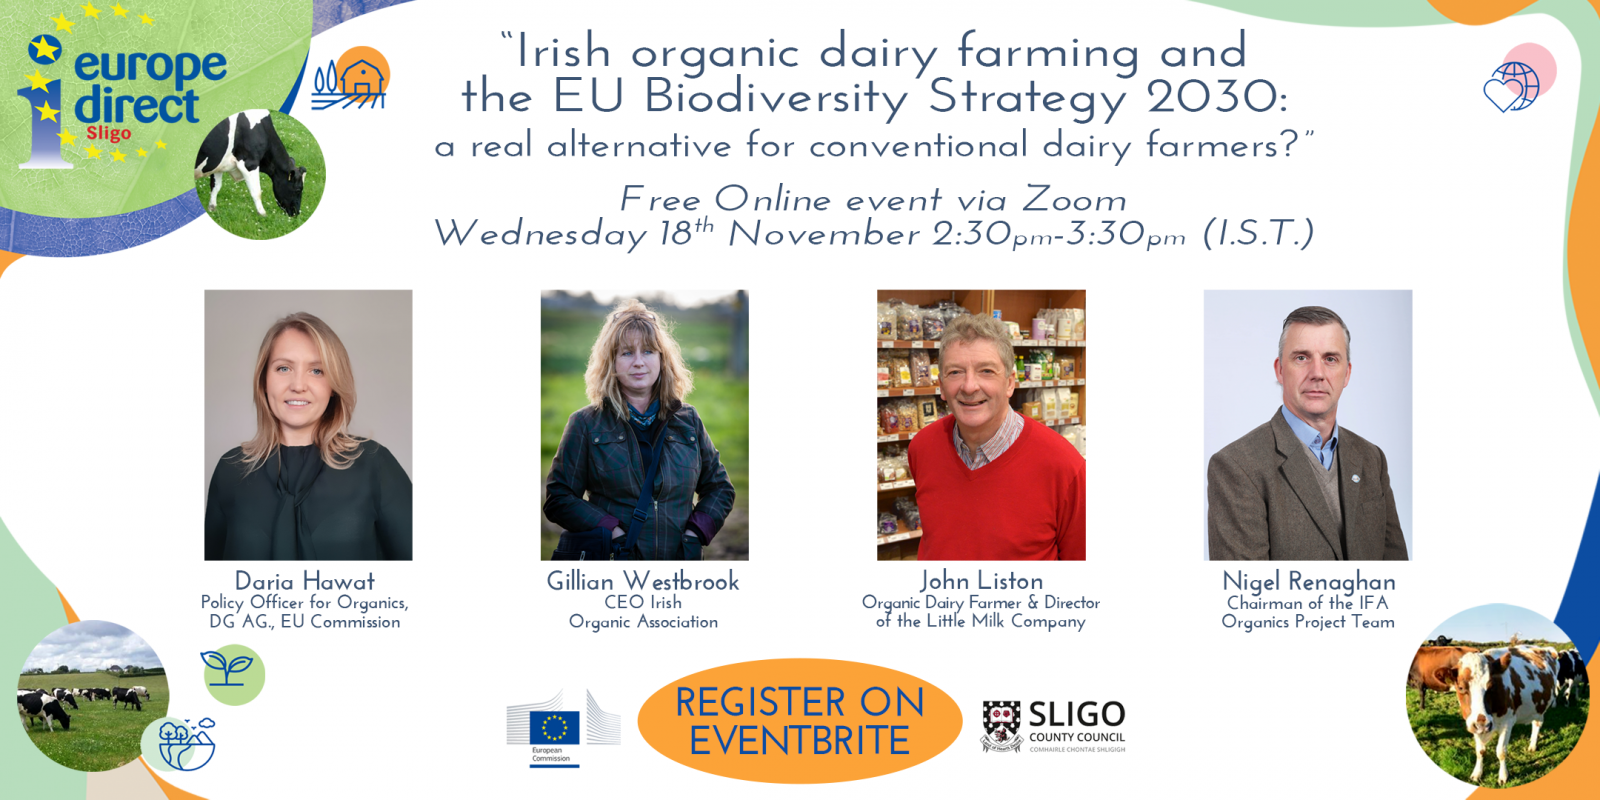 Poster for EDIC Sligo “Irish organic dairy farming and the EU Biodiversity Strategy 2030: a REAL alternative for conventional dairy farmers?”